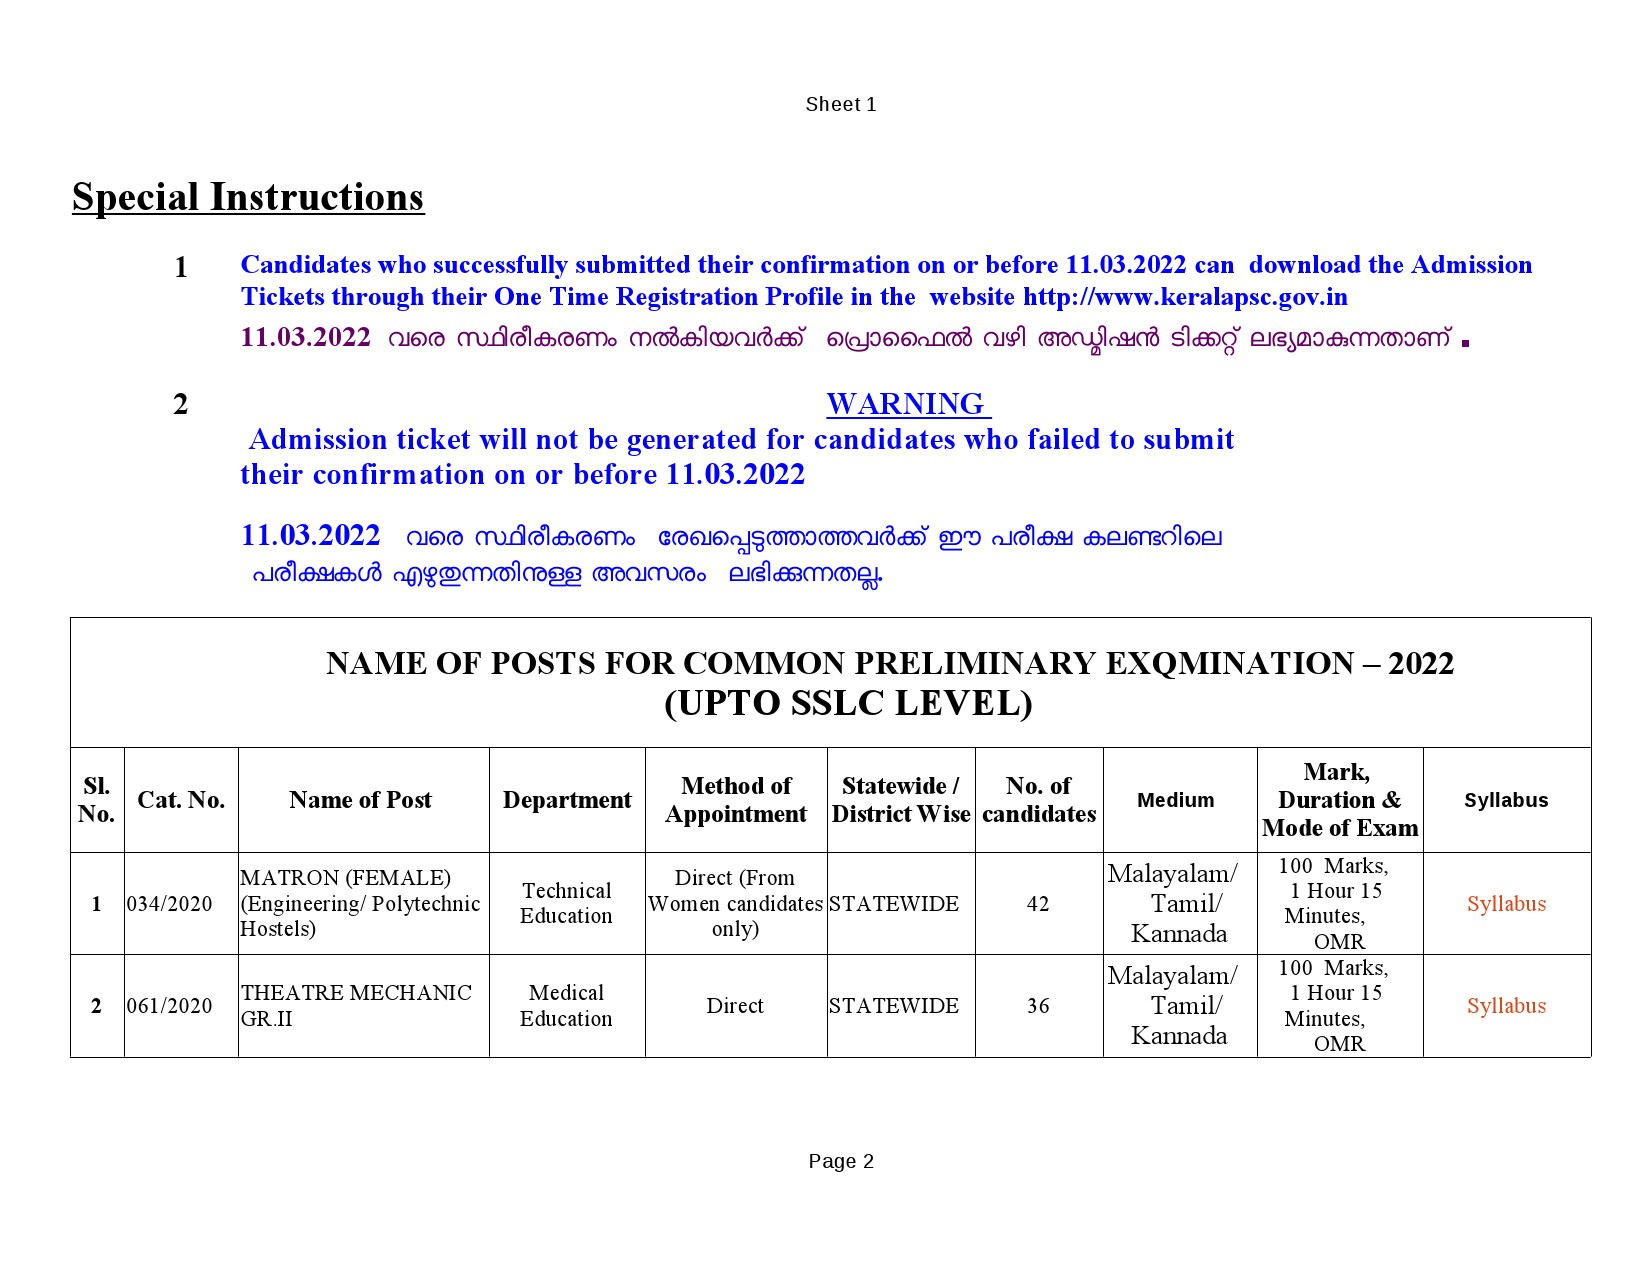 KPSC EXAM FOR COMMON PRELIMINARY EXAMINATION 2022 - Notification Image 2